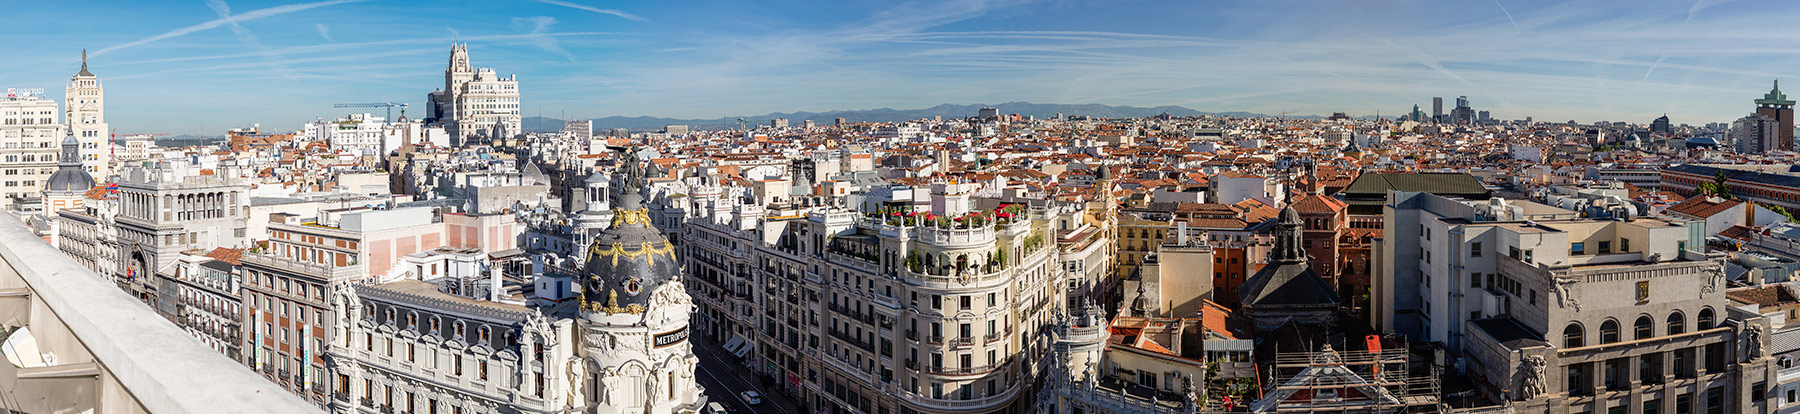 Vista panorâmica da pintura de Madrid